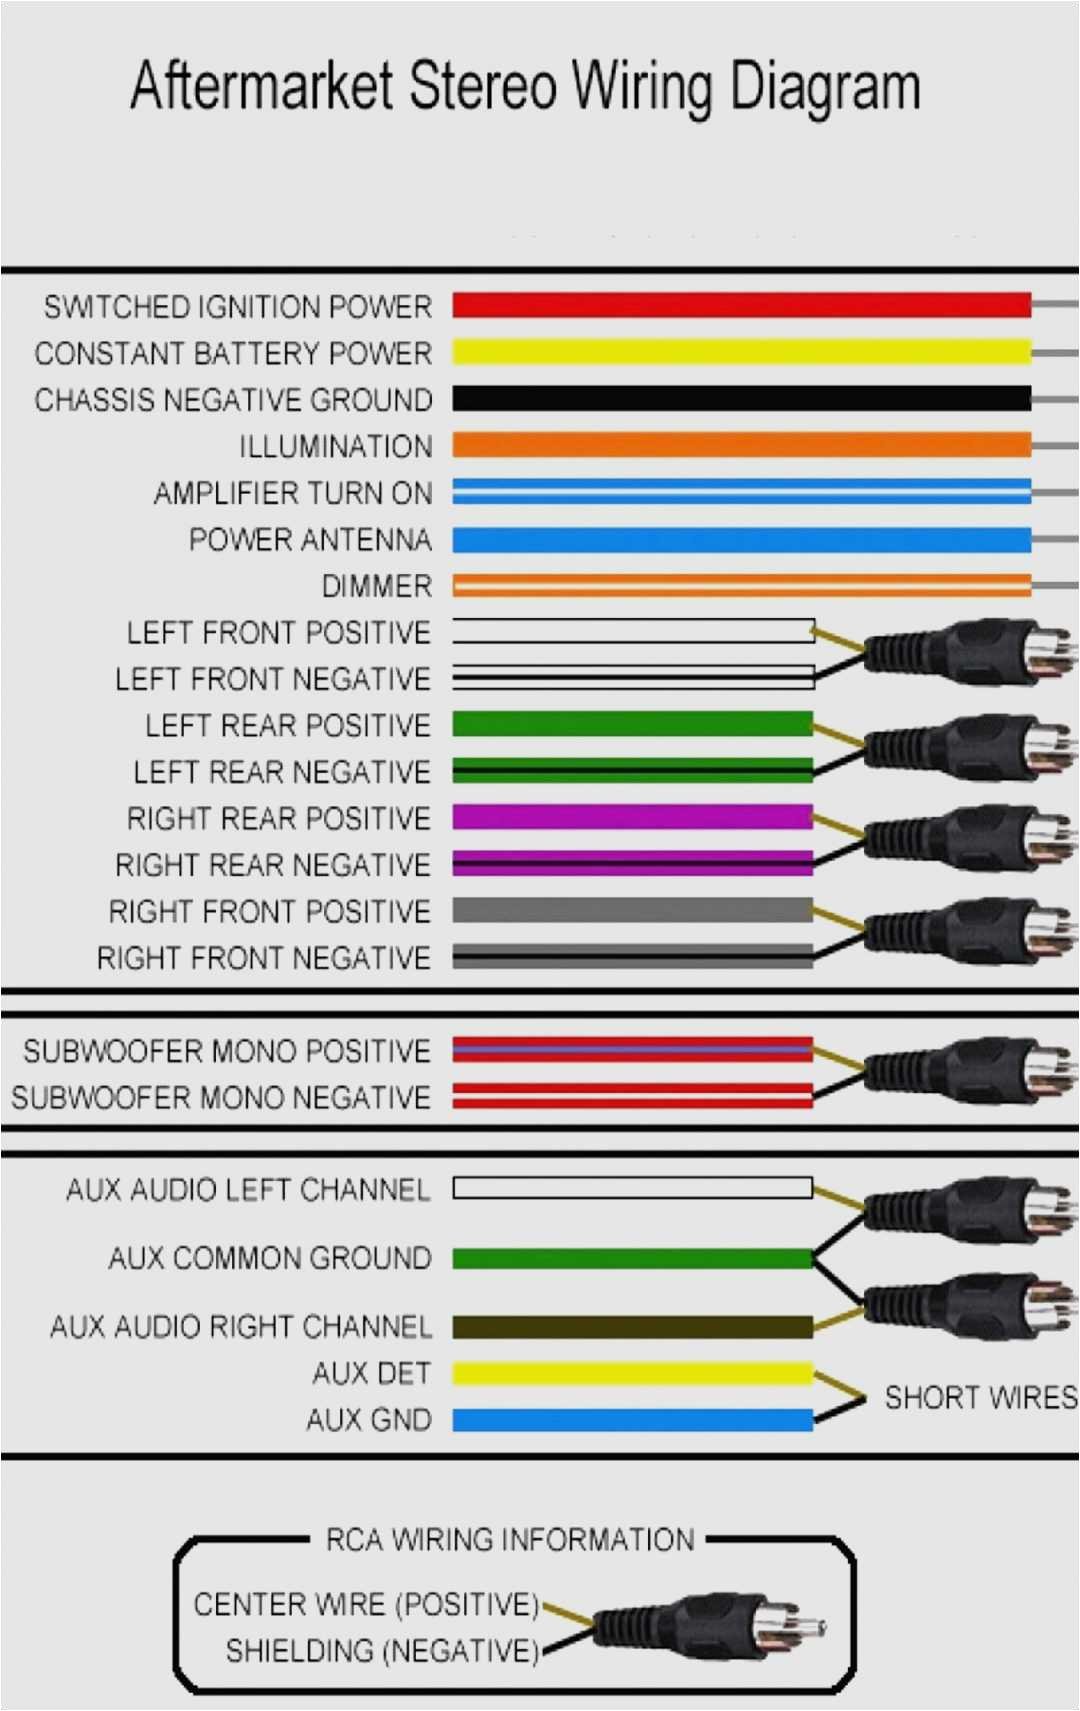 vx commodore stereo wiring diagram jvc car stereo wiring diagram color awesome jvc wiring harness rh crissnetonline